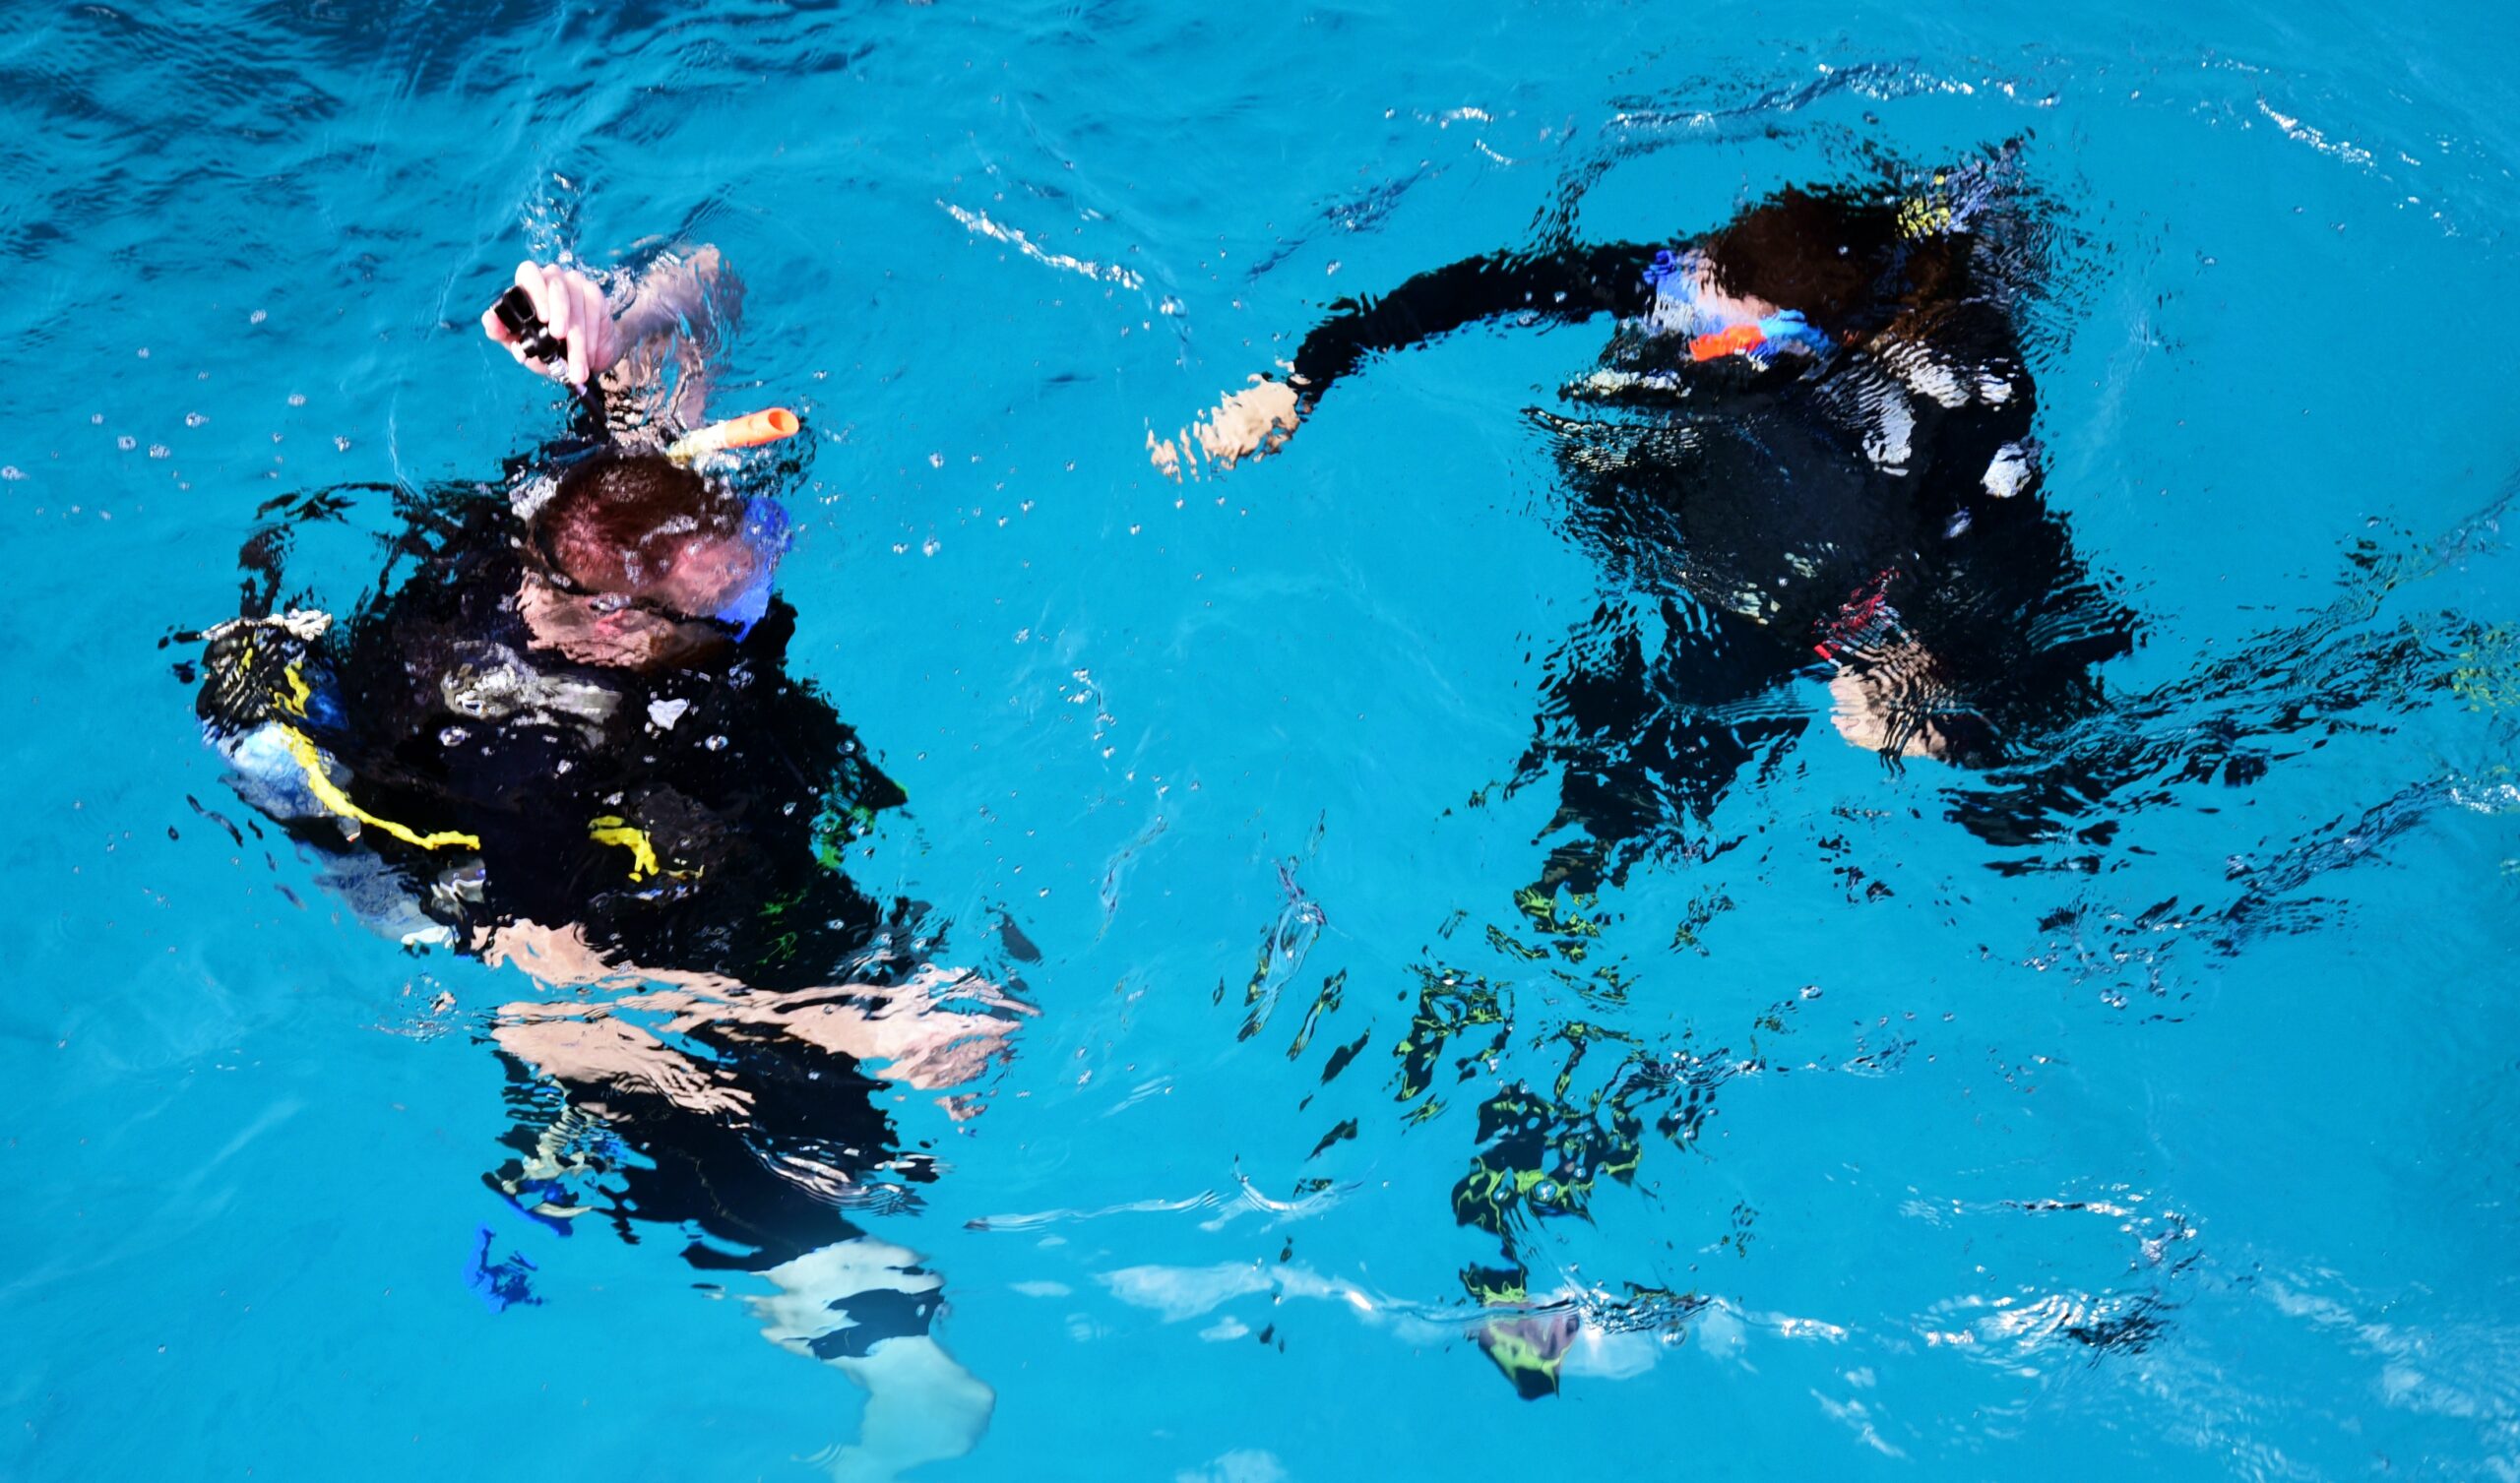 scuba divers in pool practicing skills